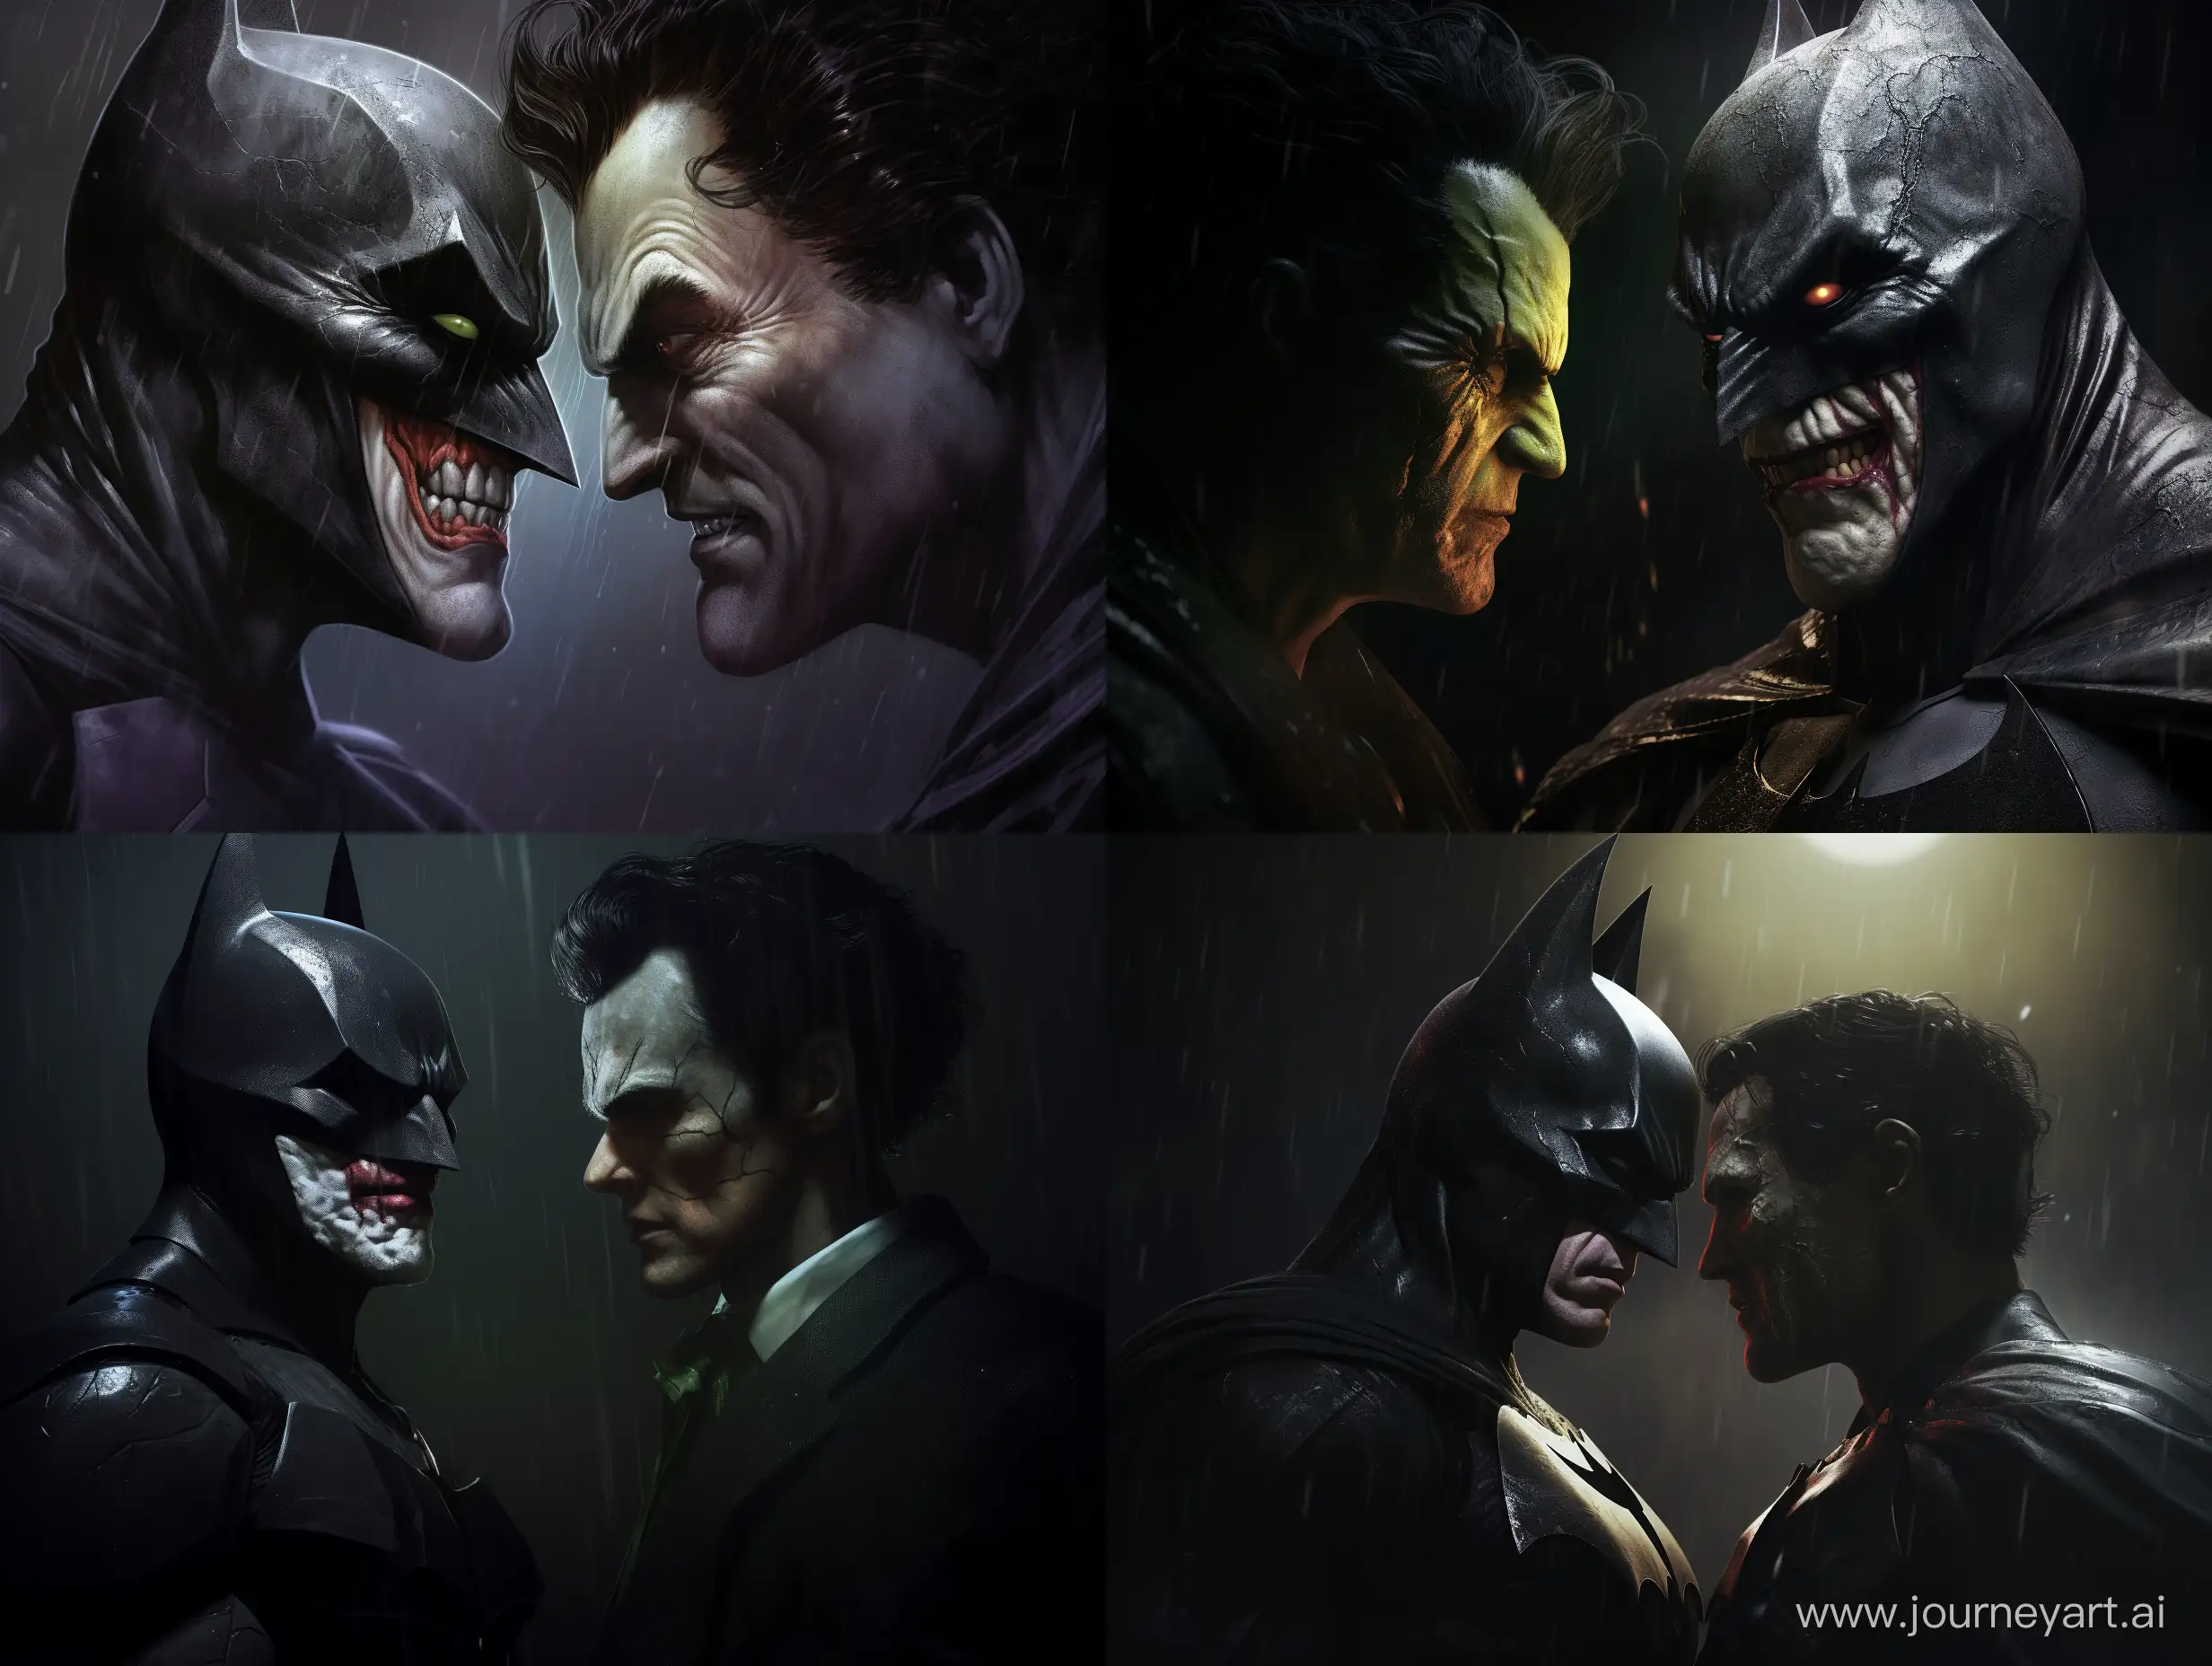 Intense-Confrontation-Batman-and-the-Joker-Faceoff-in-the-Dark-DC-Comics-Universe